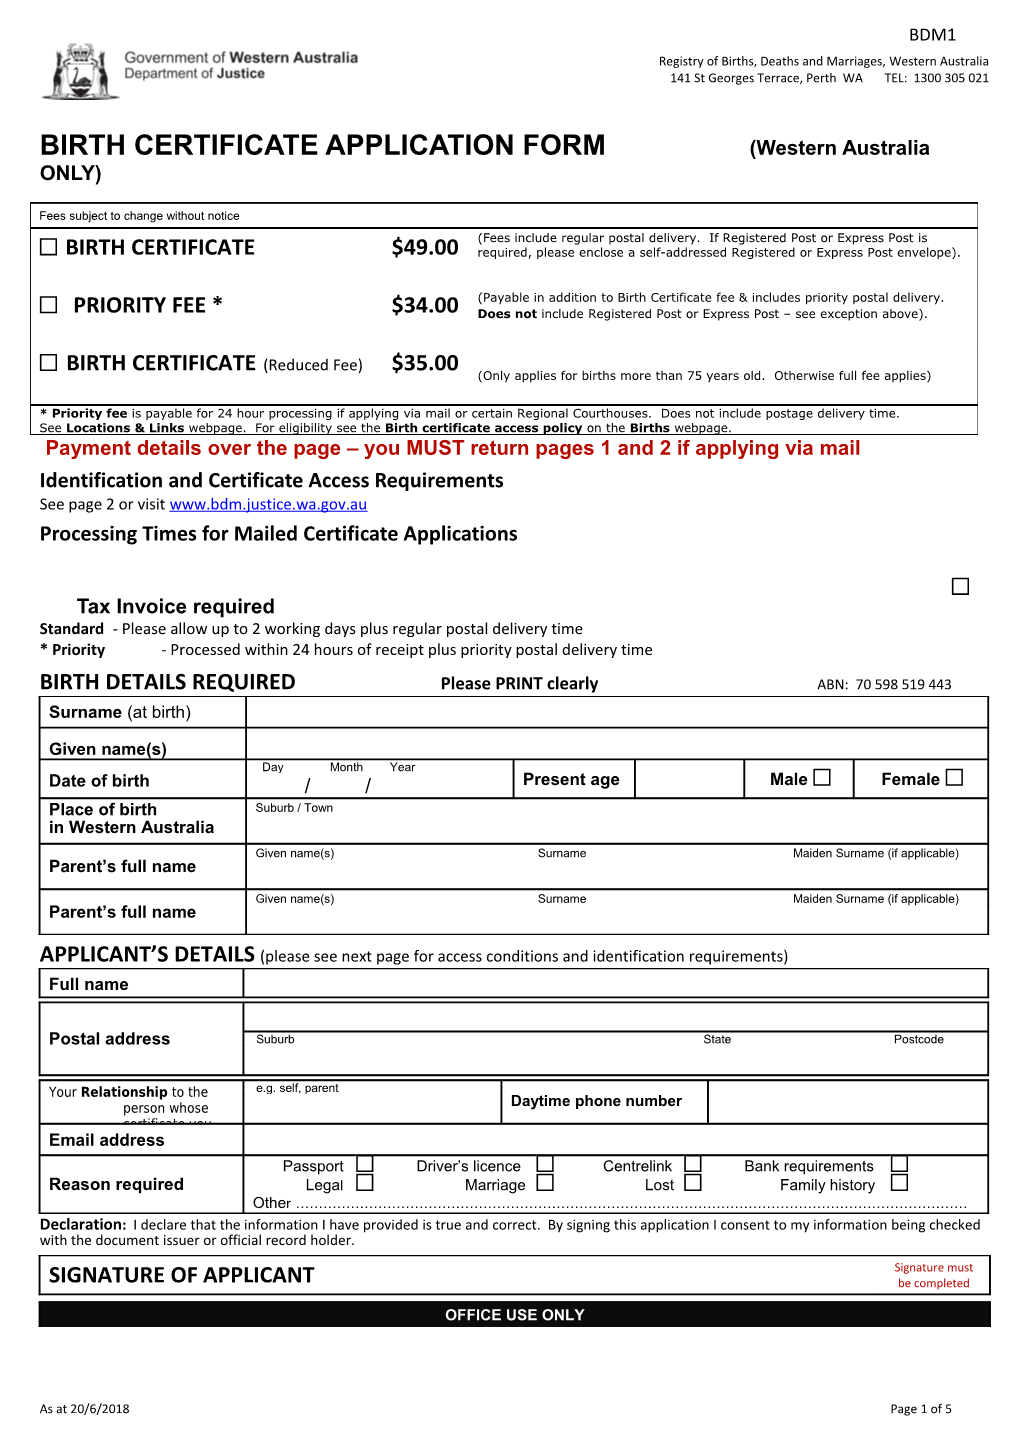 Birth Certificate Application Form - BDM1